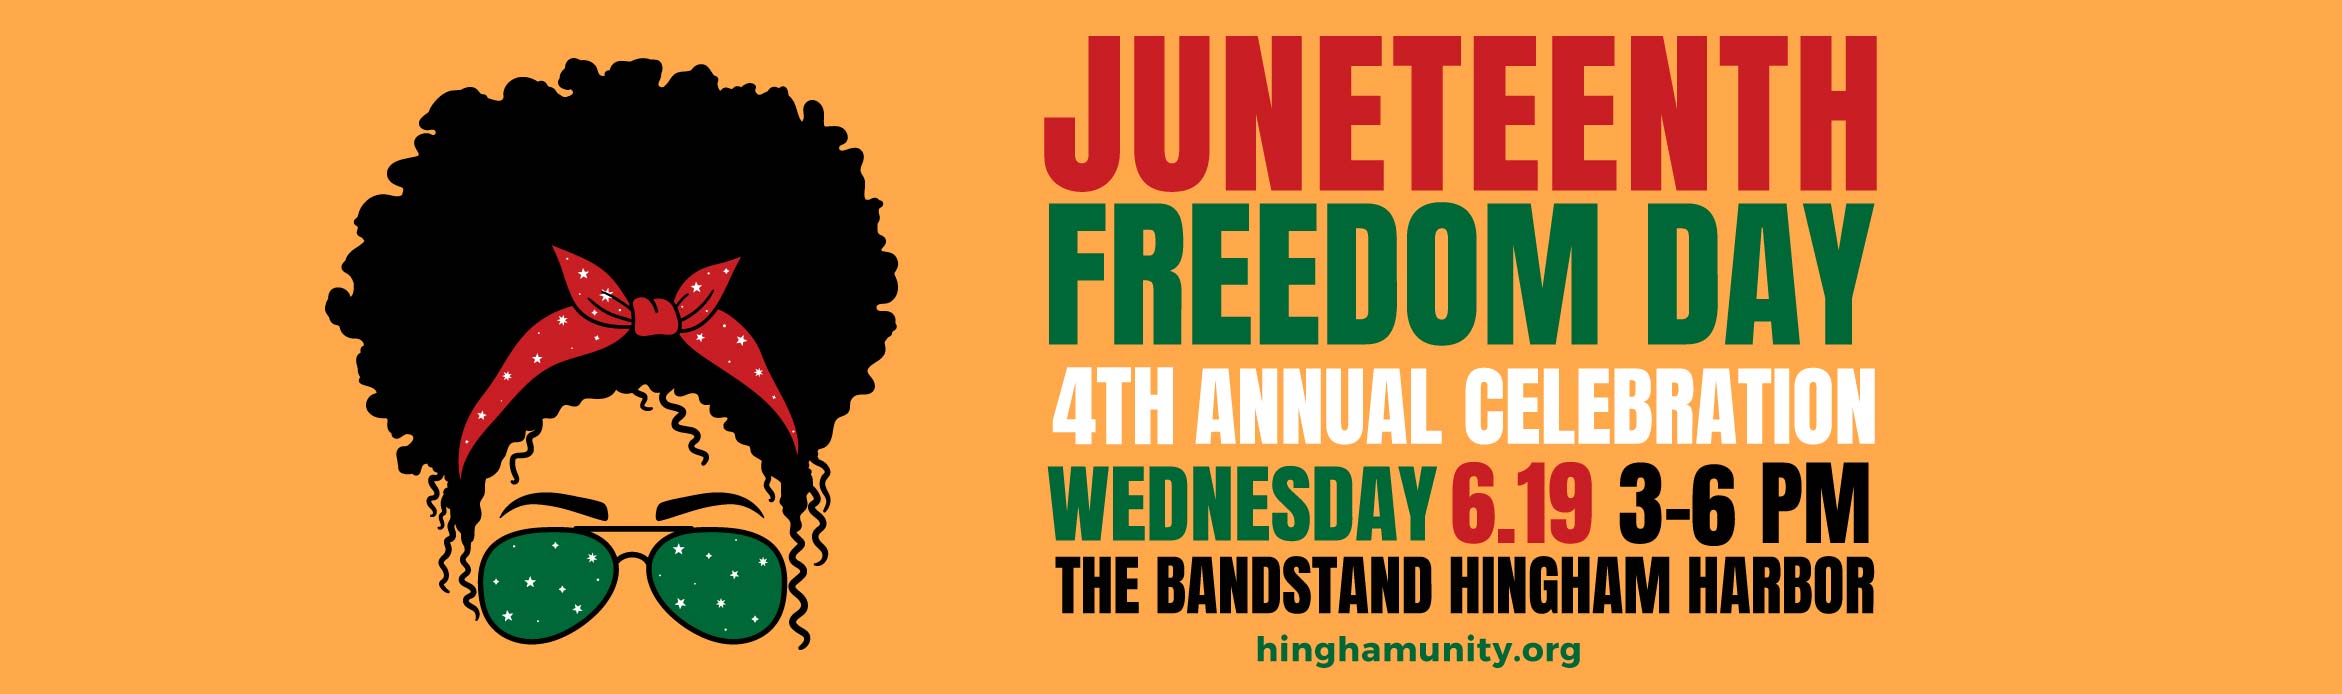 Juneteenth freedom day hinghamunity banner